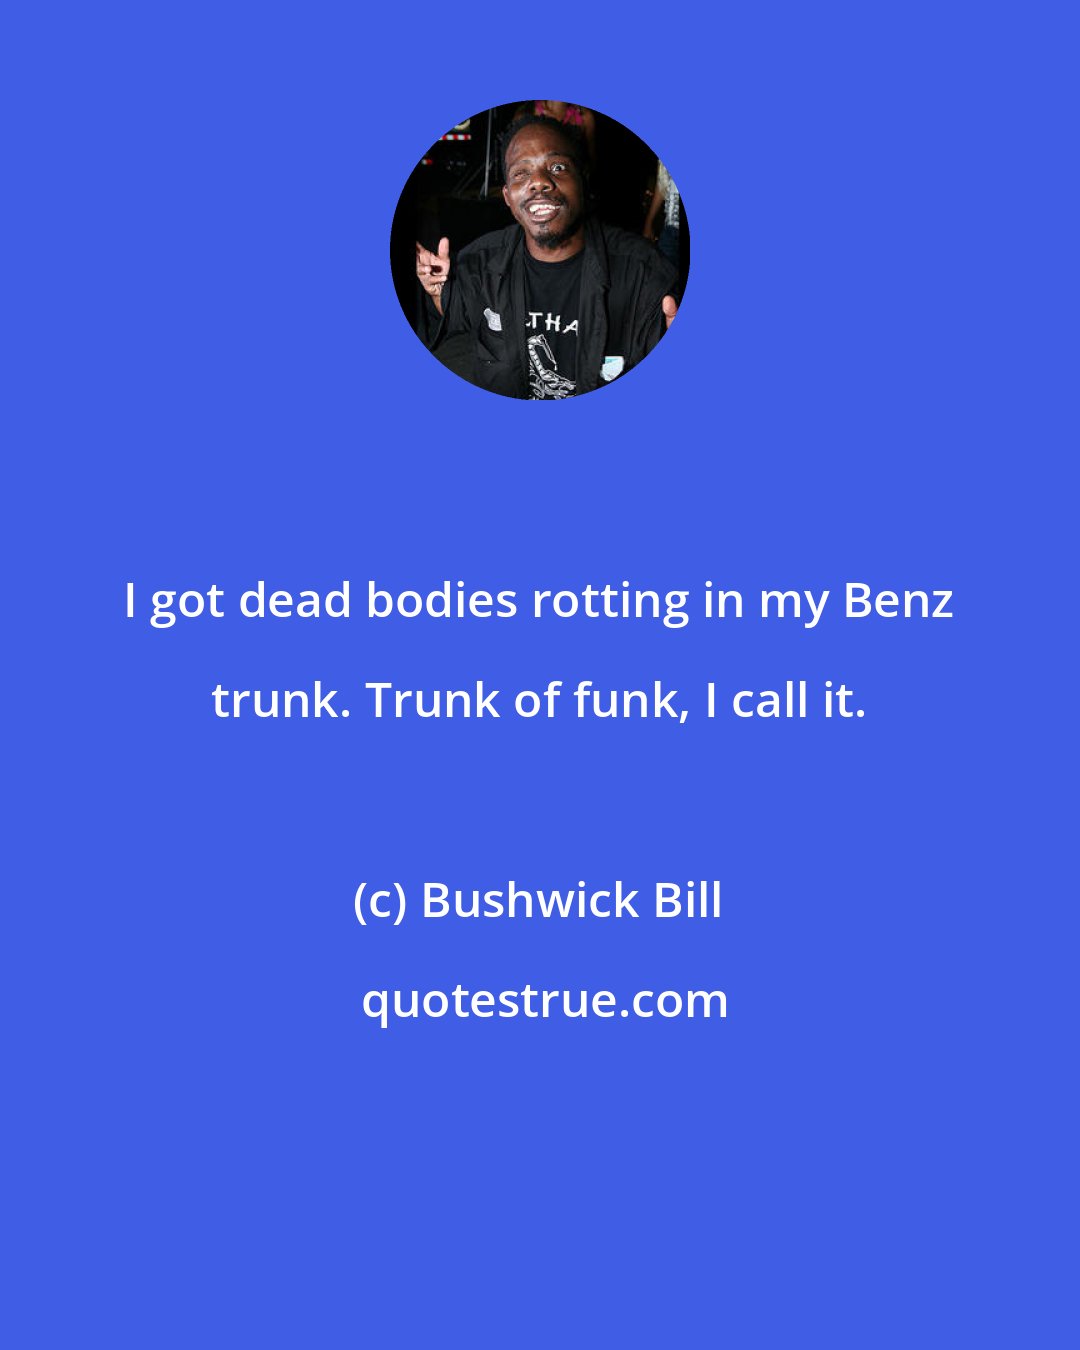 Bushwick Bill: I got dead bodies rotting in my Benz trunk. Trunk of funk, I call it.